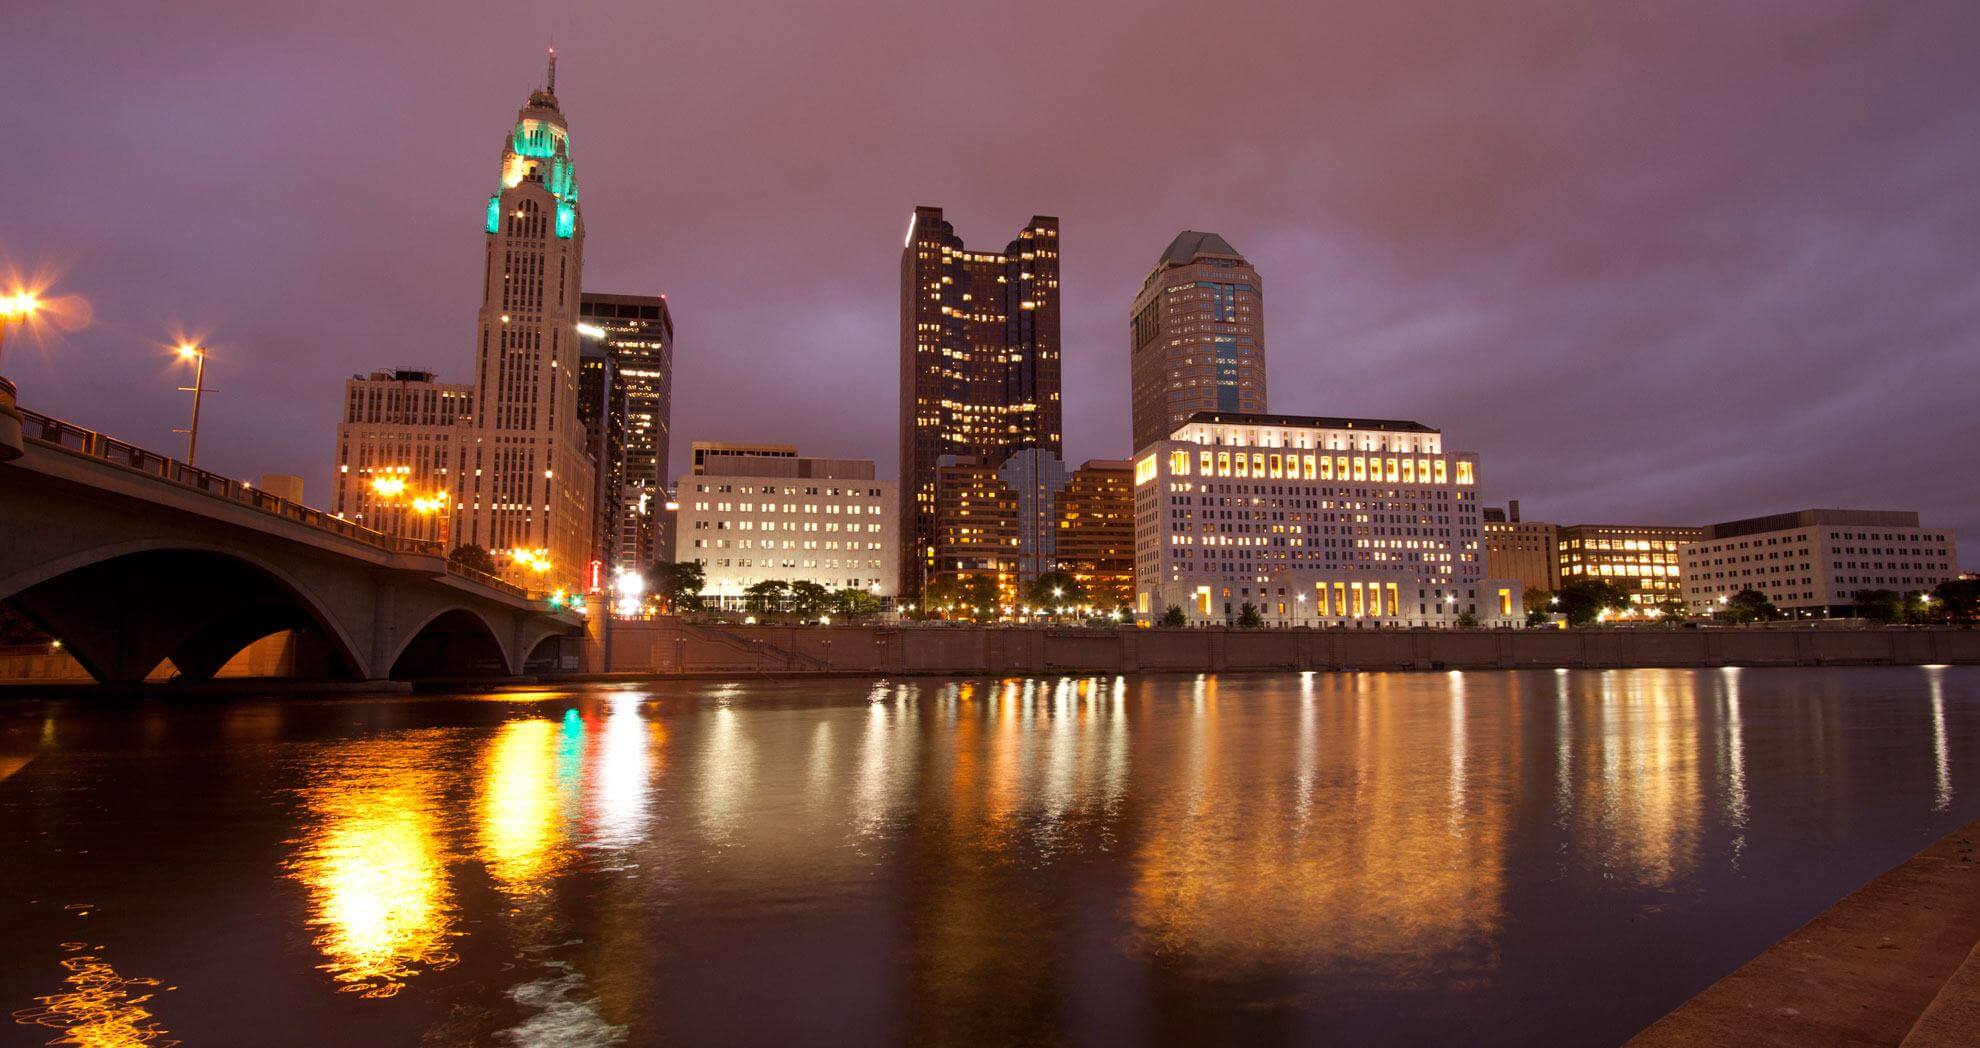 the city of Toledo, Ohio at night